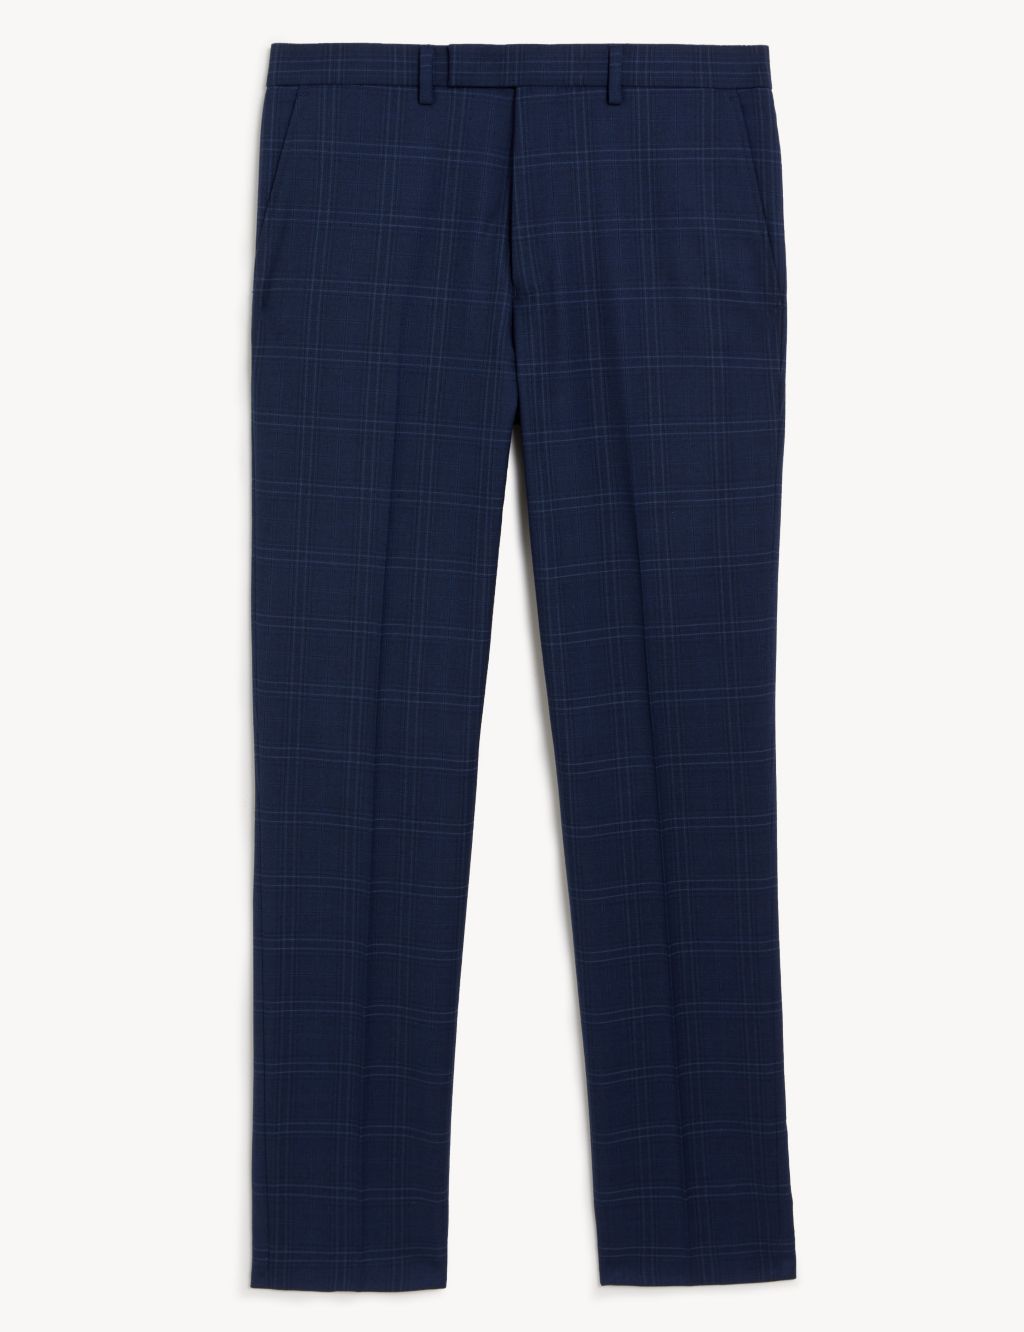 Slim Fit Check Suit Trousers image 2